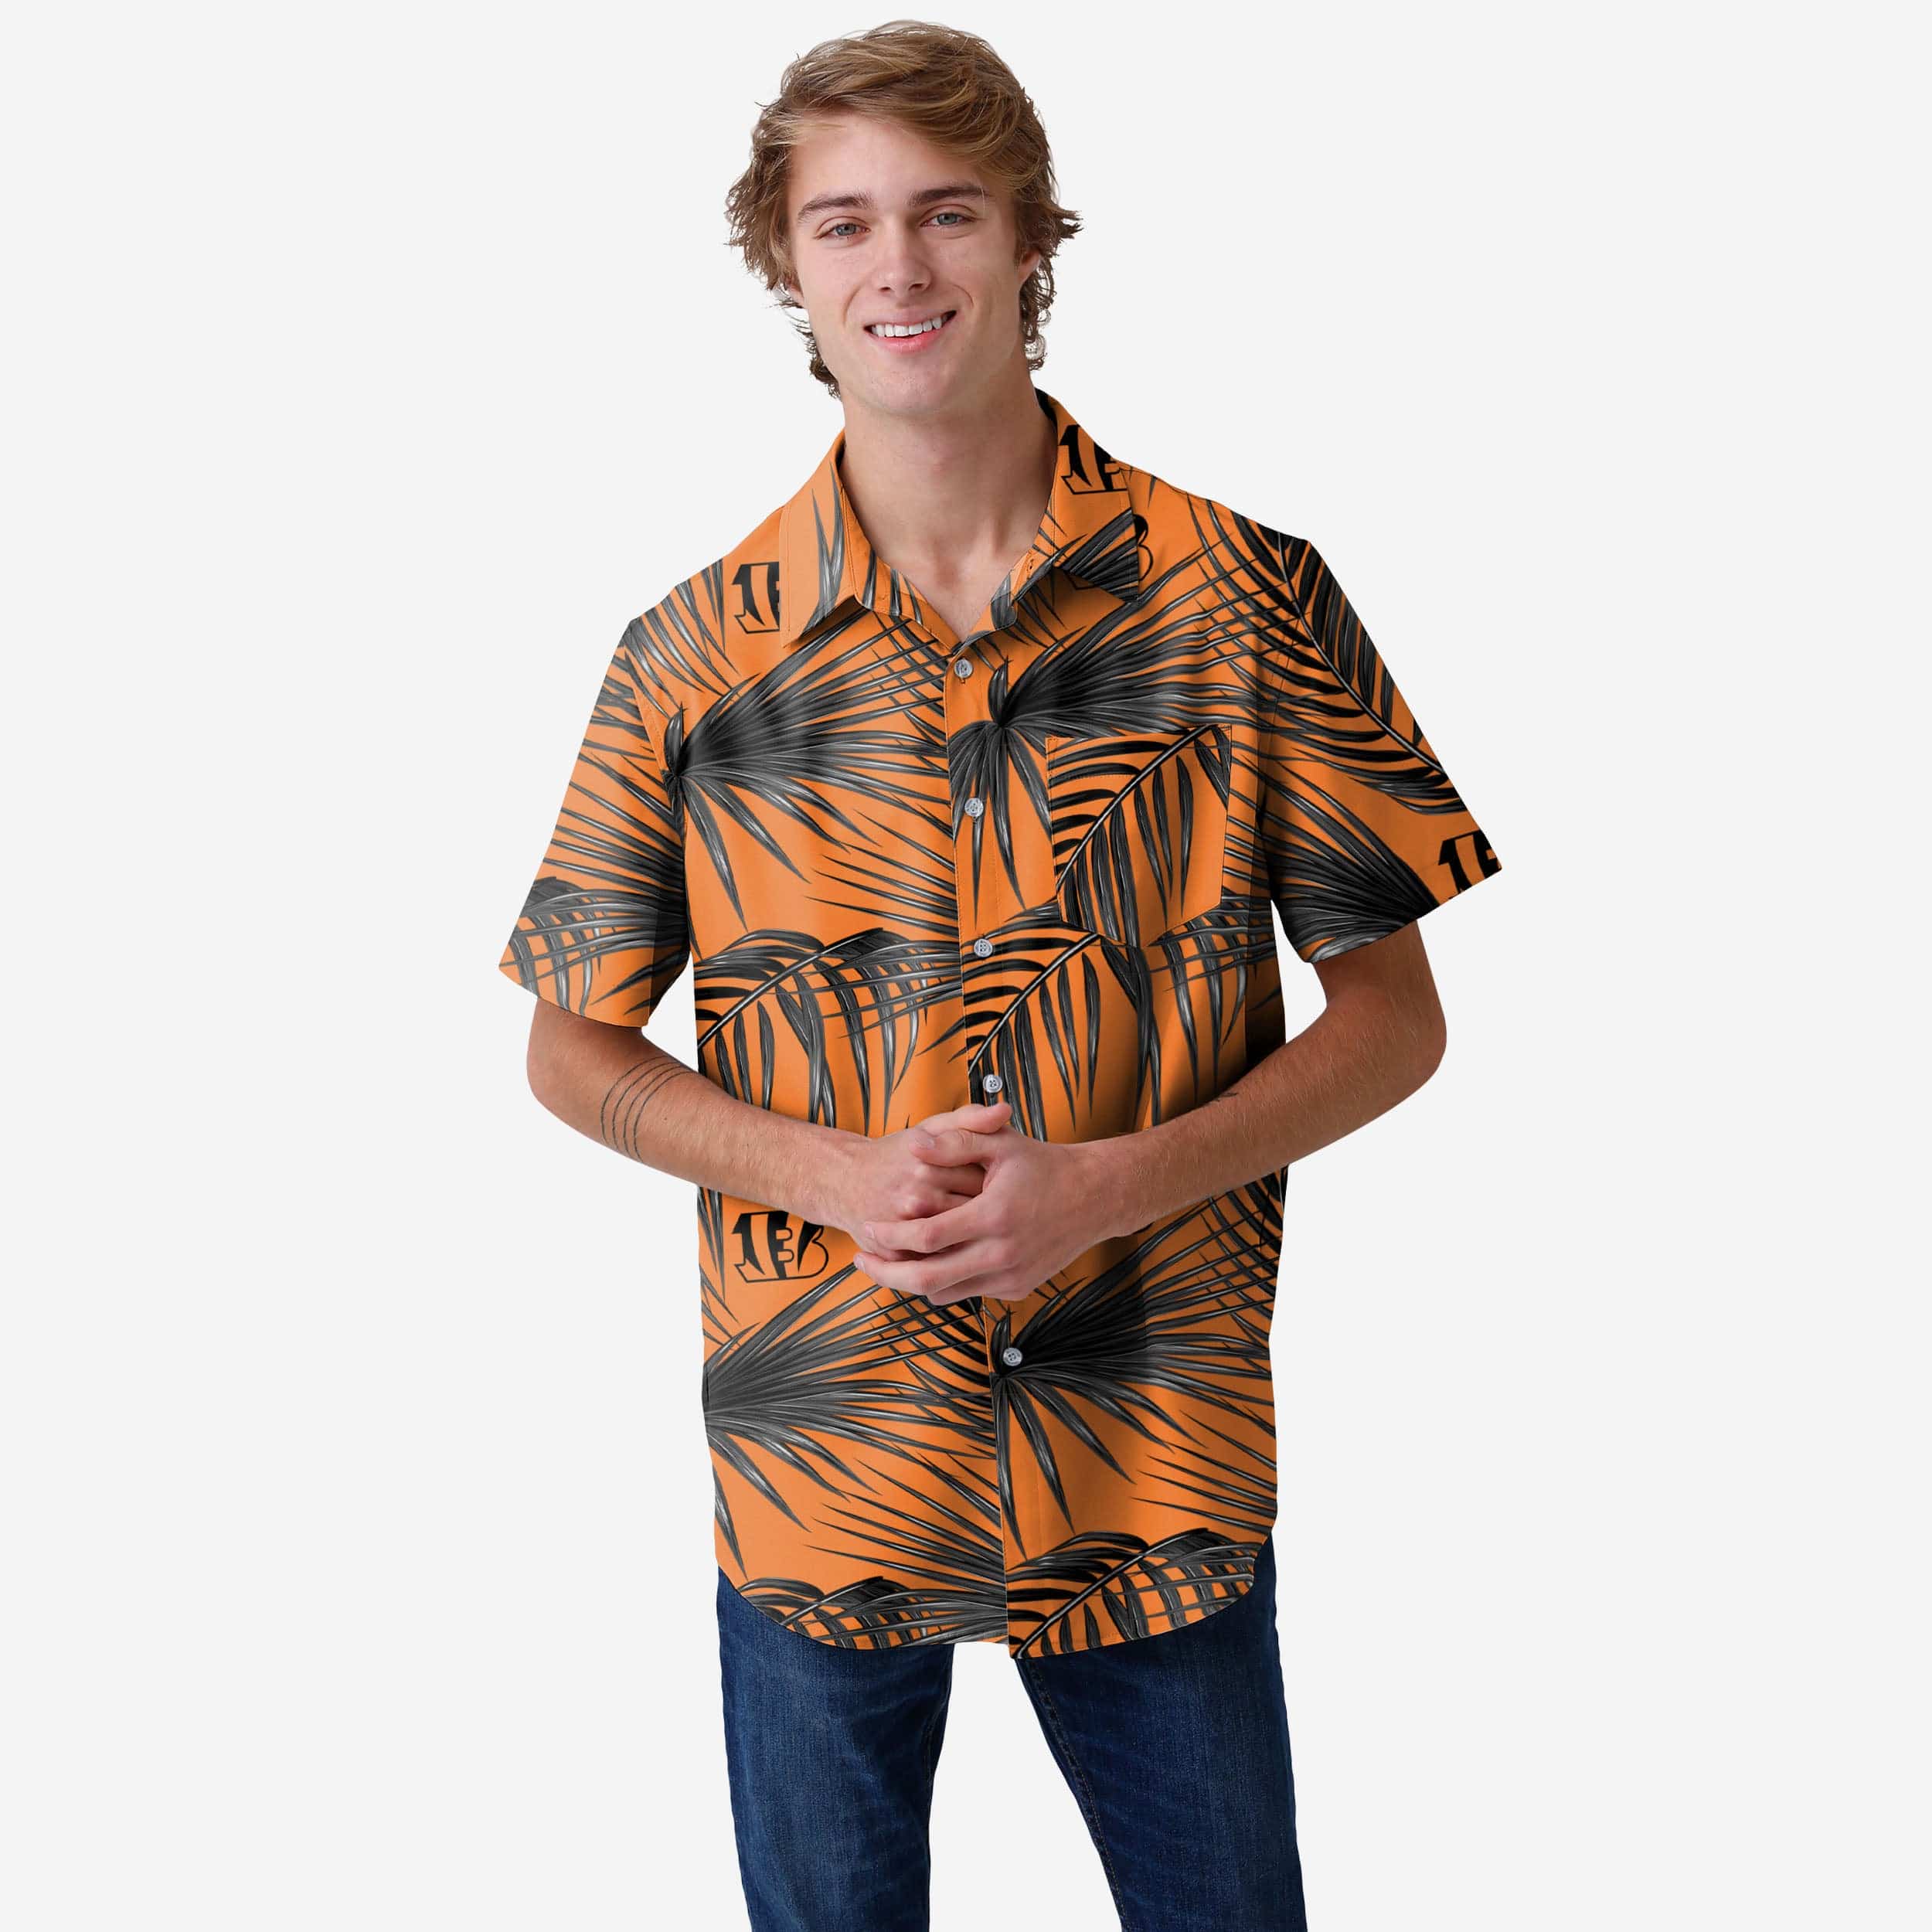 Northwestern Wildcats NCAA Hawaiian Shirt Seaside Aloha Shirt - Trendy Aloha